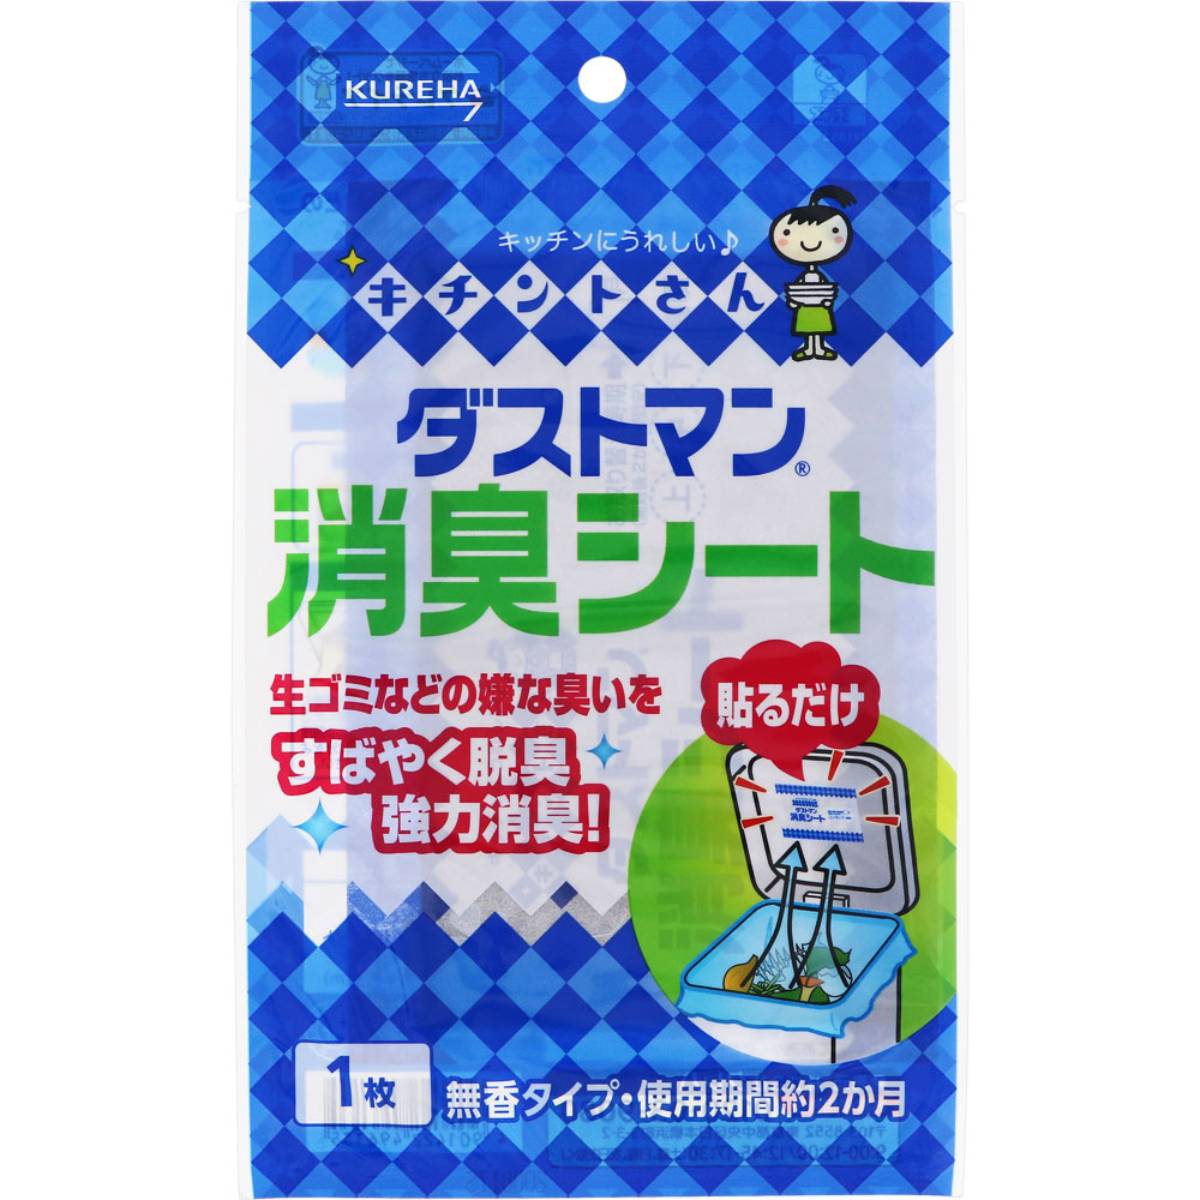 Bin Deodorant Sticker - 3in1 Set (Japan Edition)